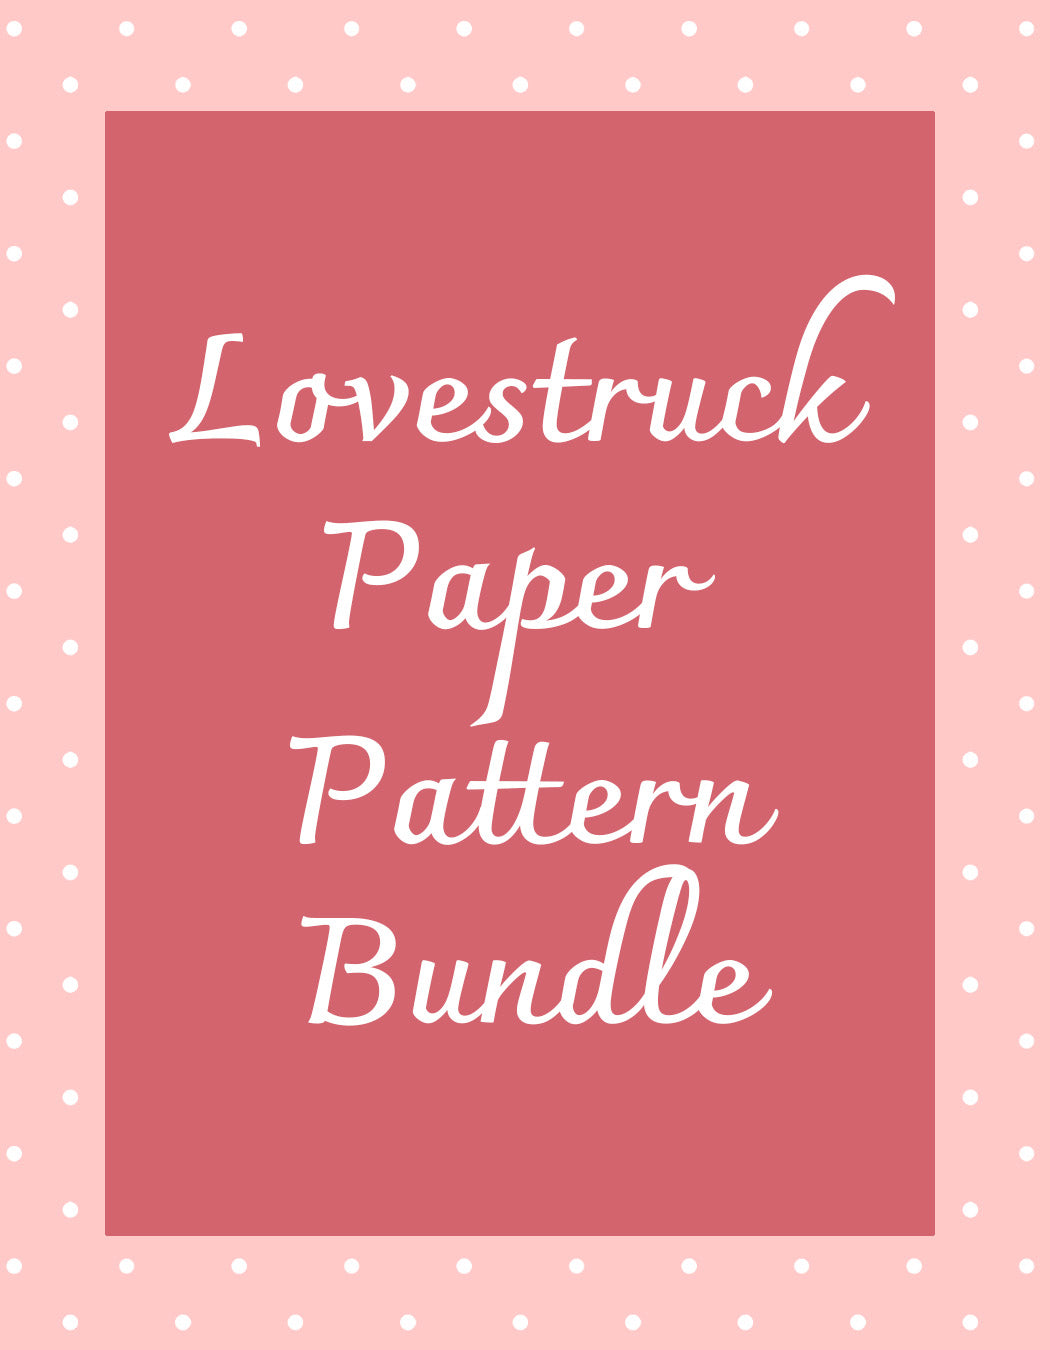 Lovestruck Paper Pattern Bundle - 20% off